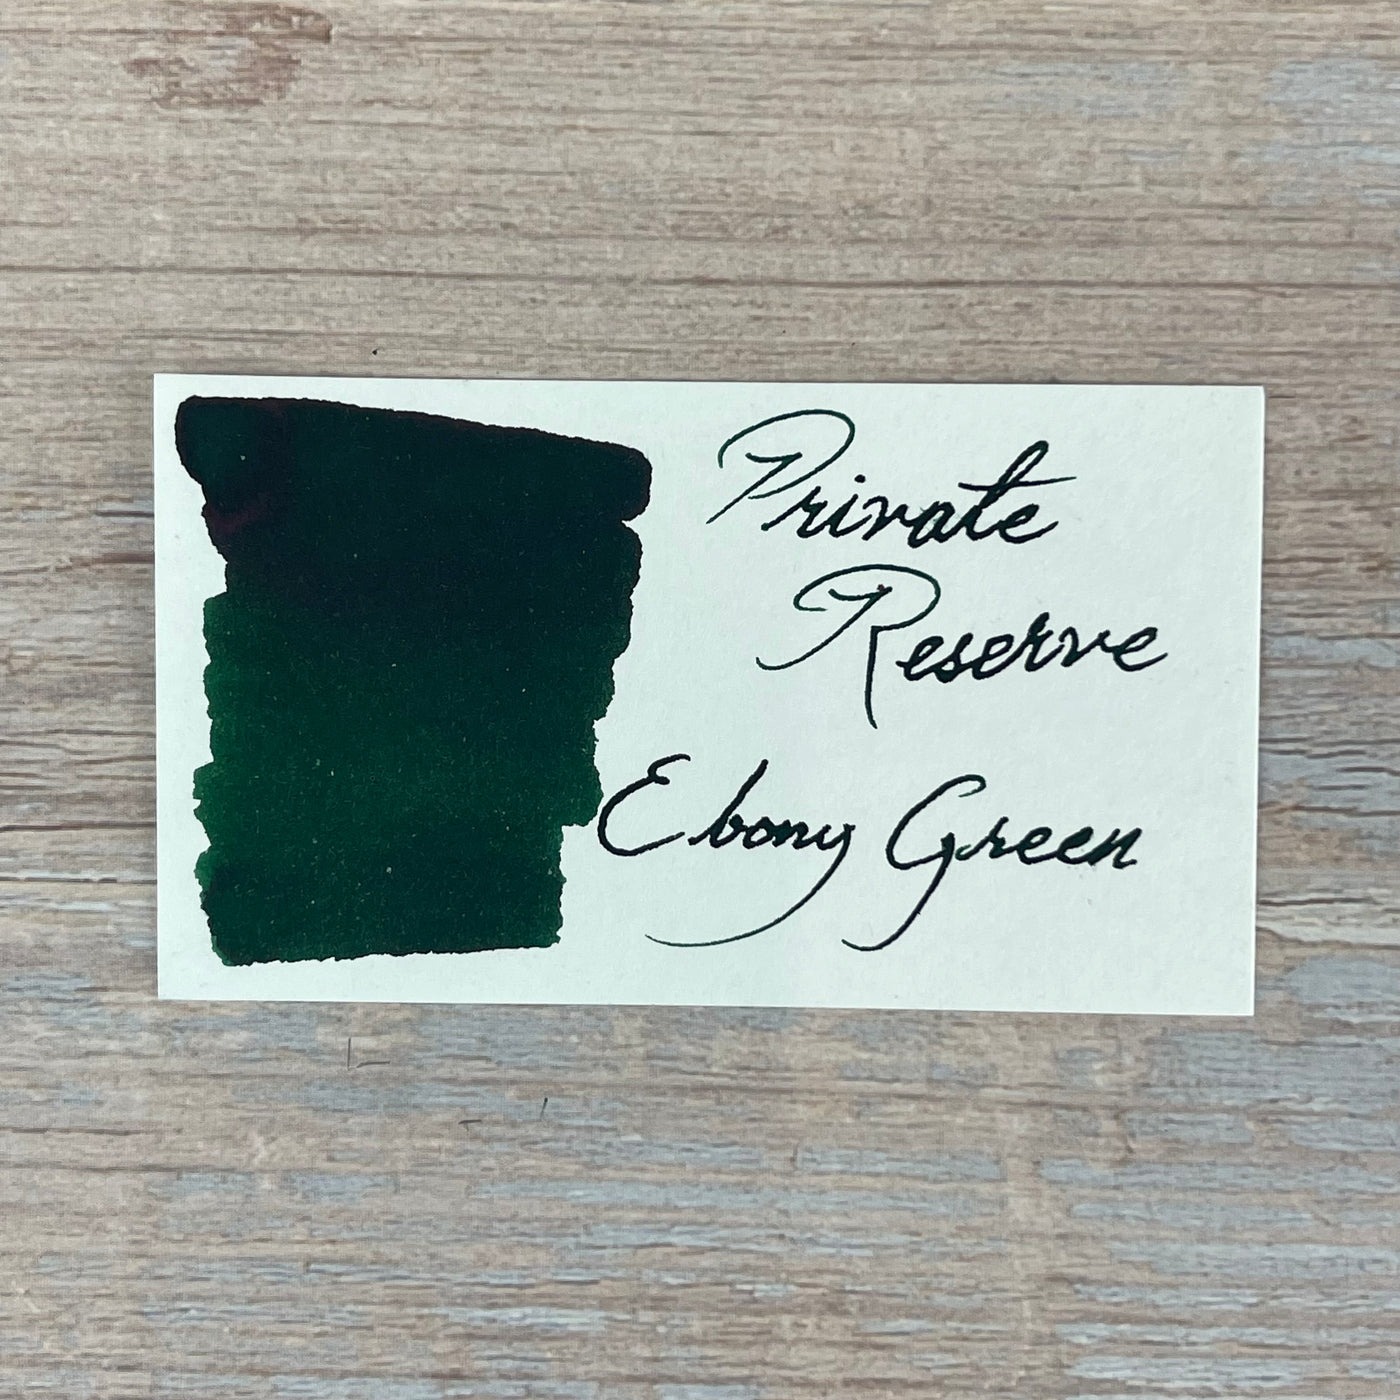 Private Reserve Ebony Green - 60ML Bottled Ink